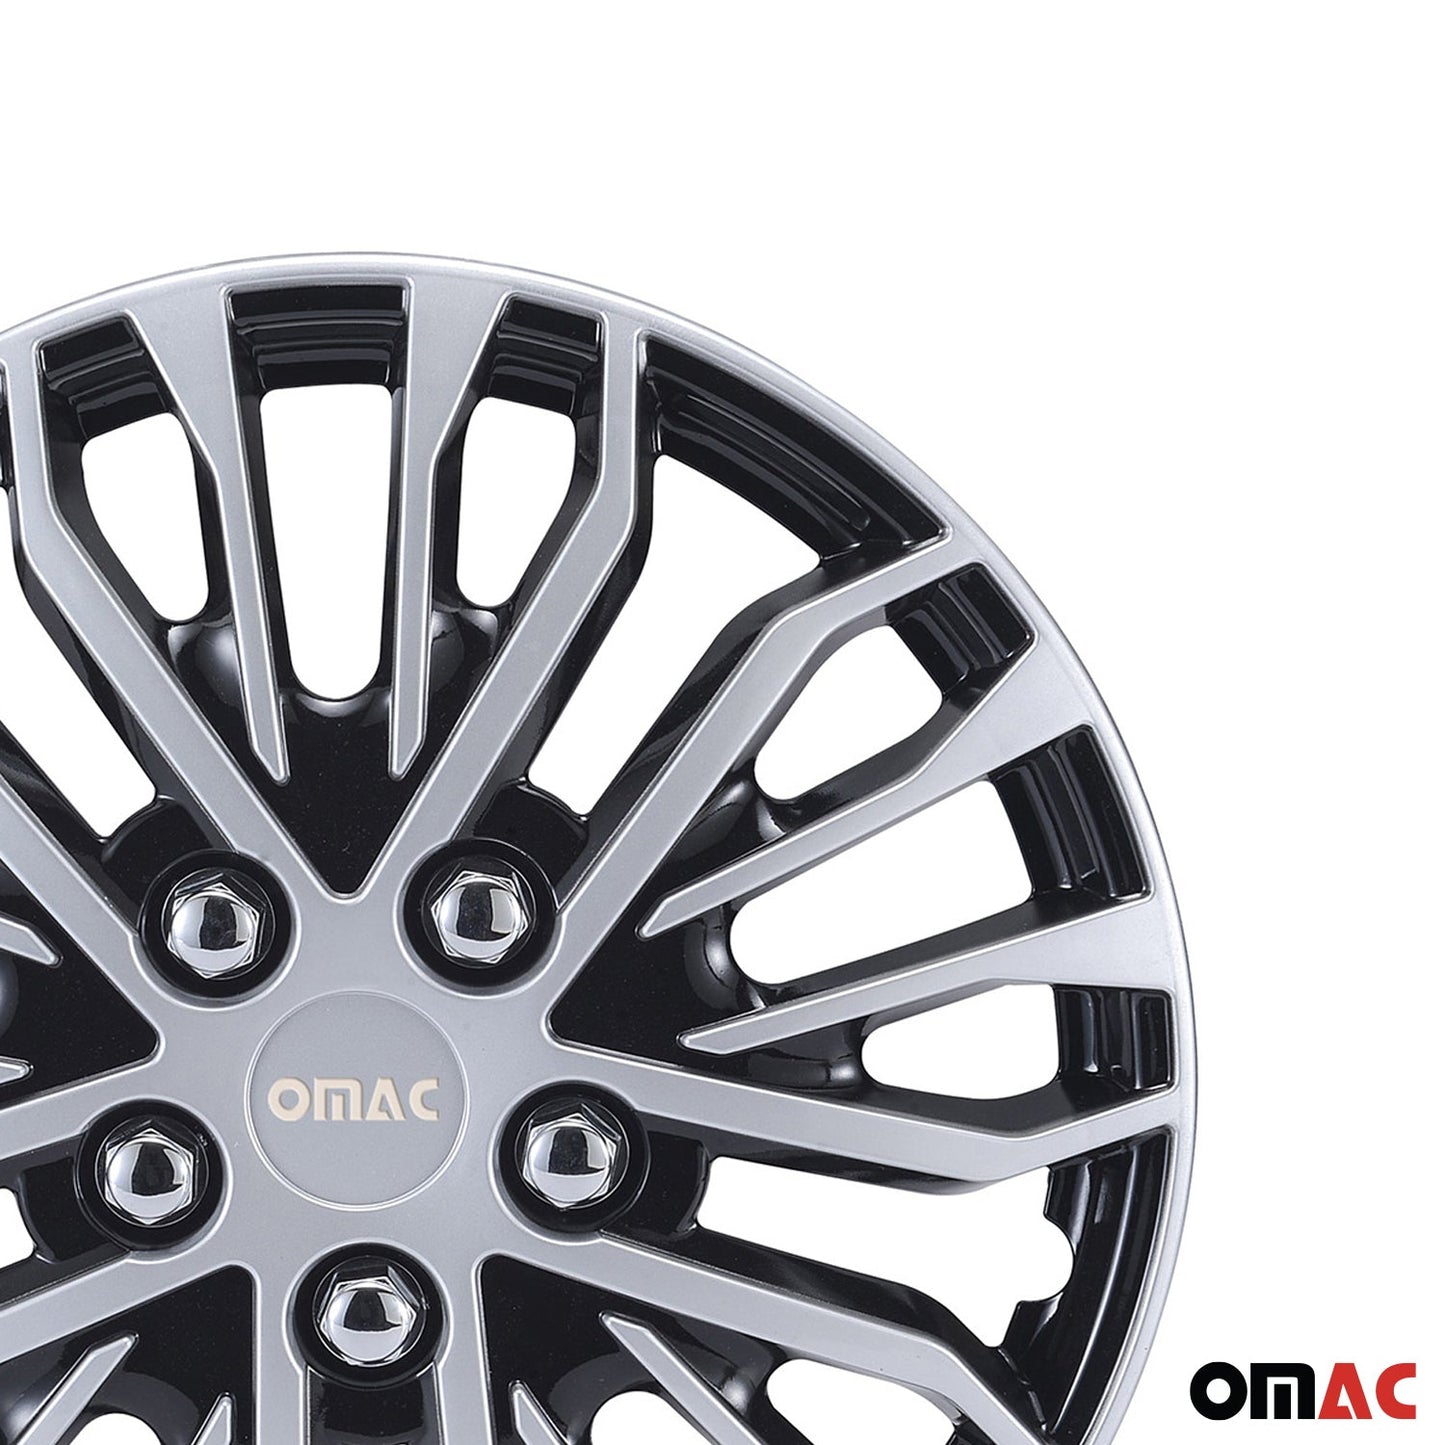 OMAC 14" Wheel Covers Guard Hub Caps Durable Snap On ABS Black Silver 4x OMAC-WE41-SVBK14